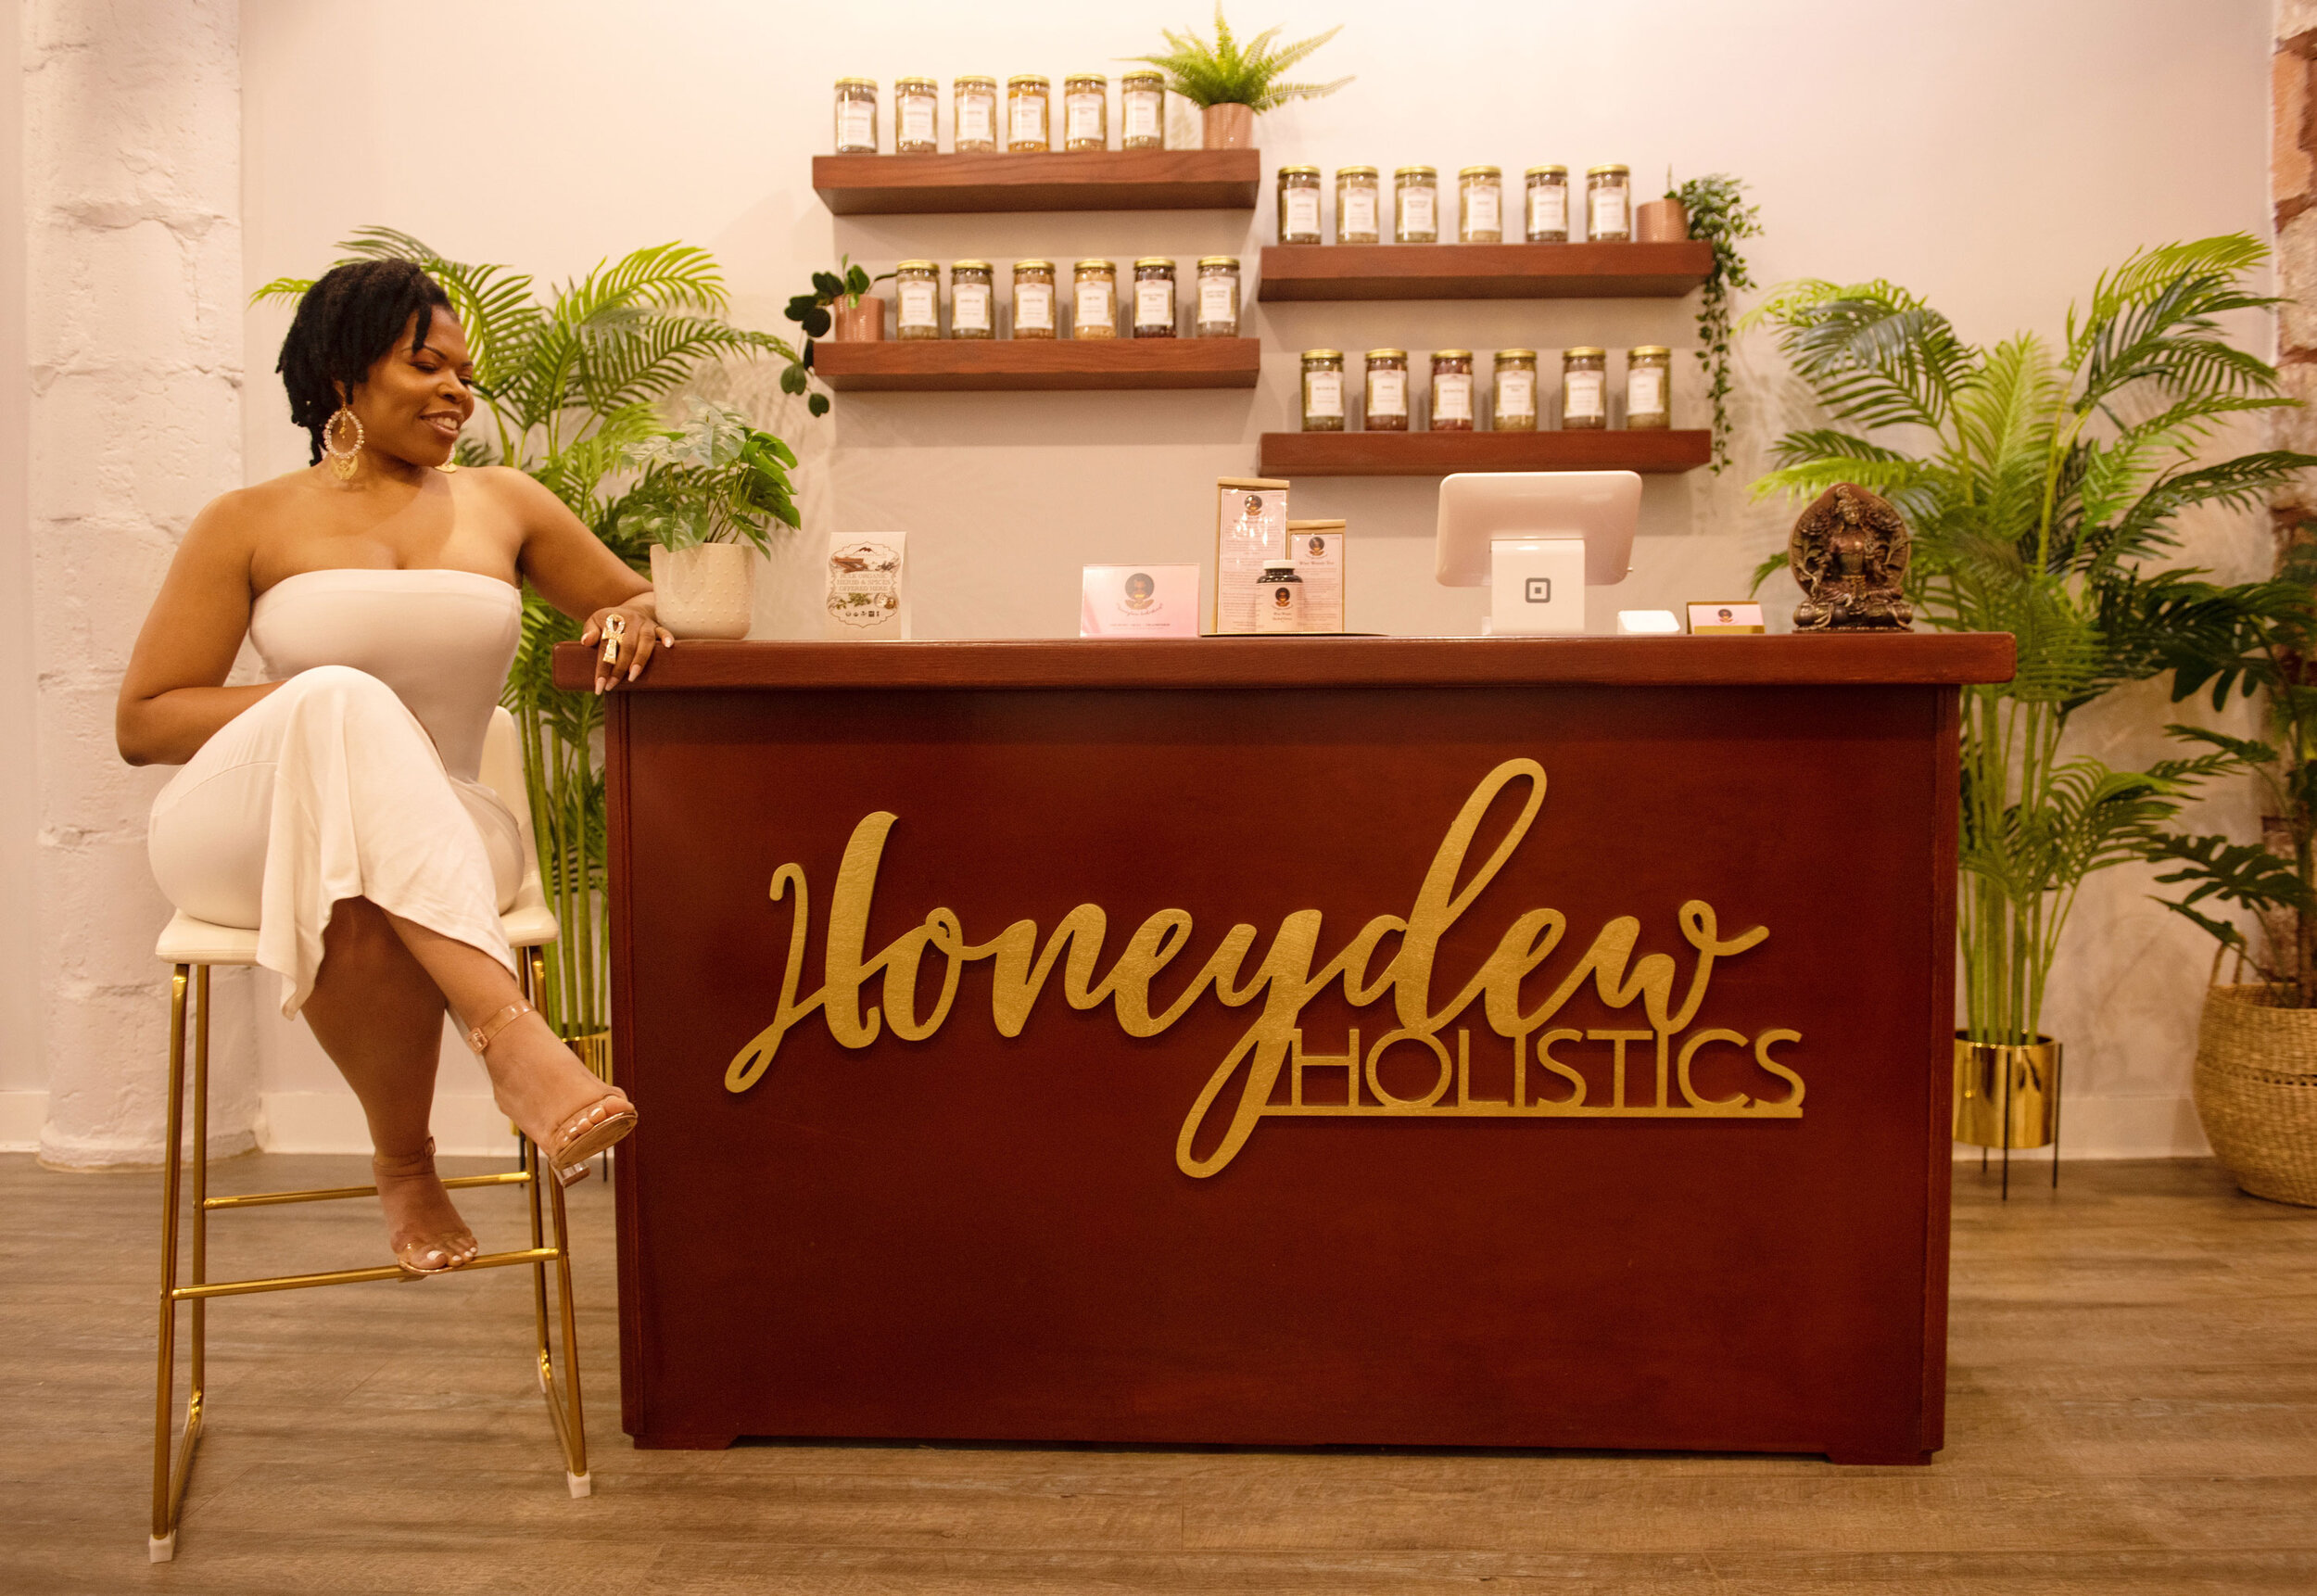 Honeydew-Holistics-Storefront-_web-7.jpg